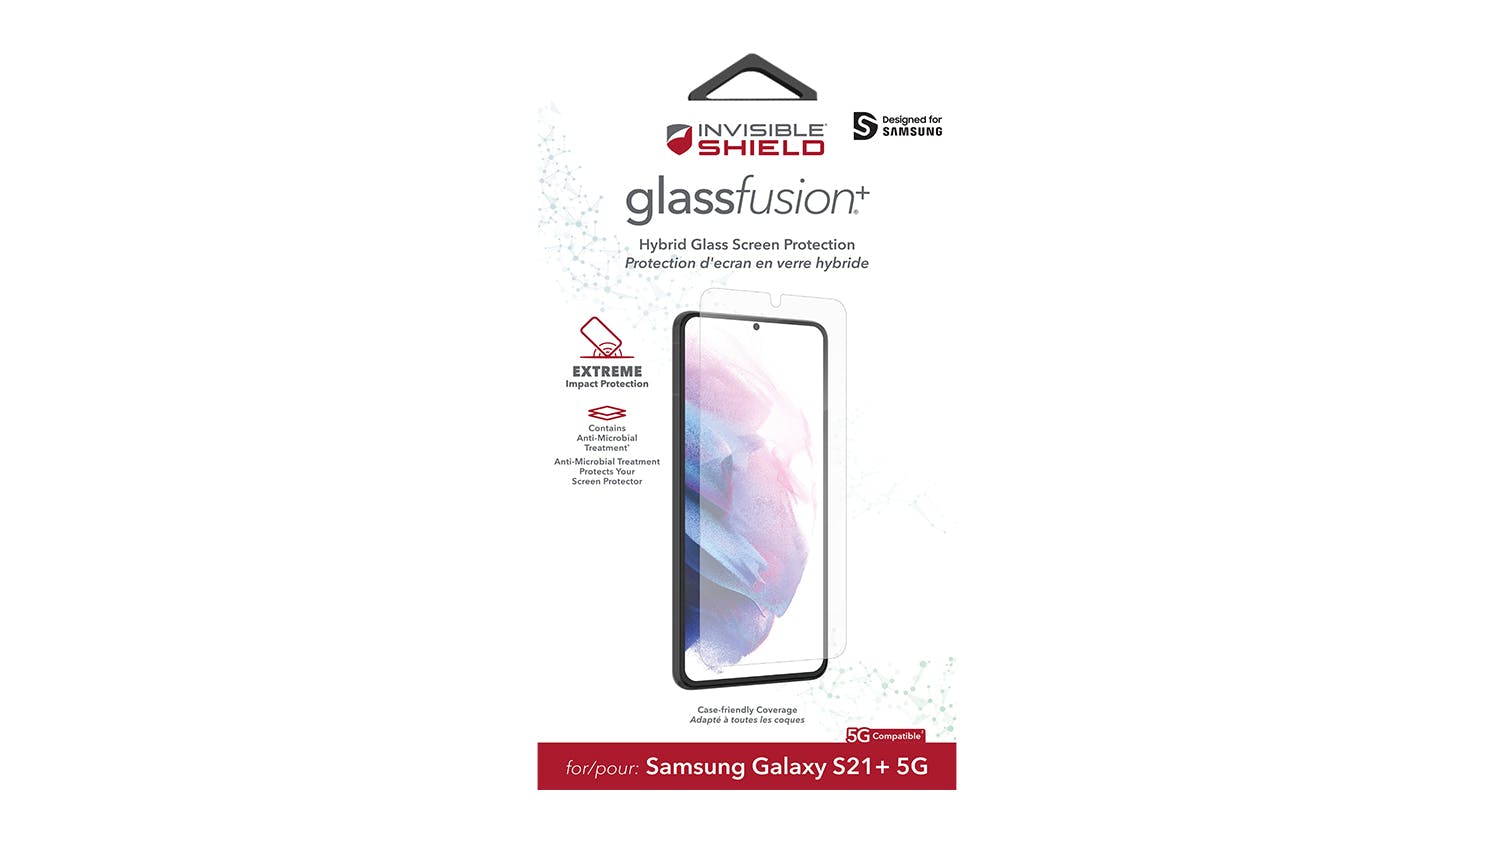 Zagg InvisibleShield GlassFusion+ Screen Protector for Samsung Galaxy S21+ 5G